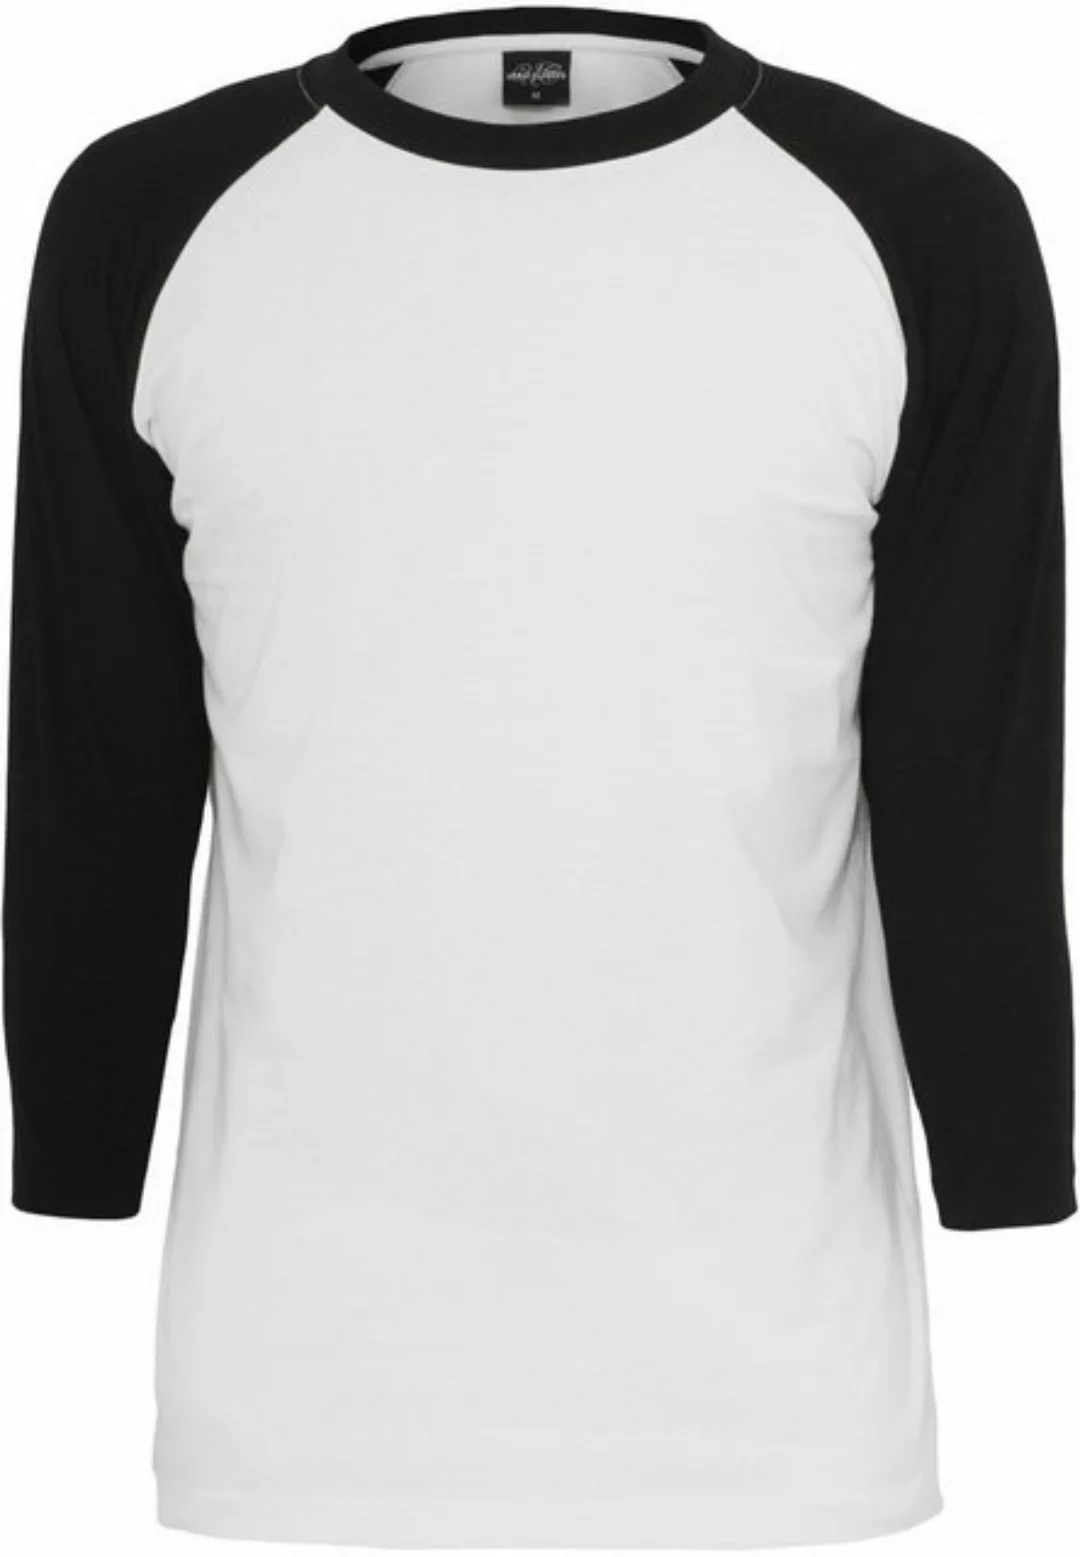 URBAN CLASSICS T-Shirt Urban Classics Herren Contrast 3/4 Sleeve Raglan Tee günstig online kaufen